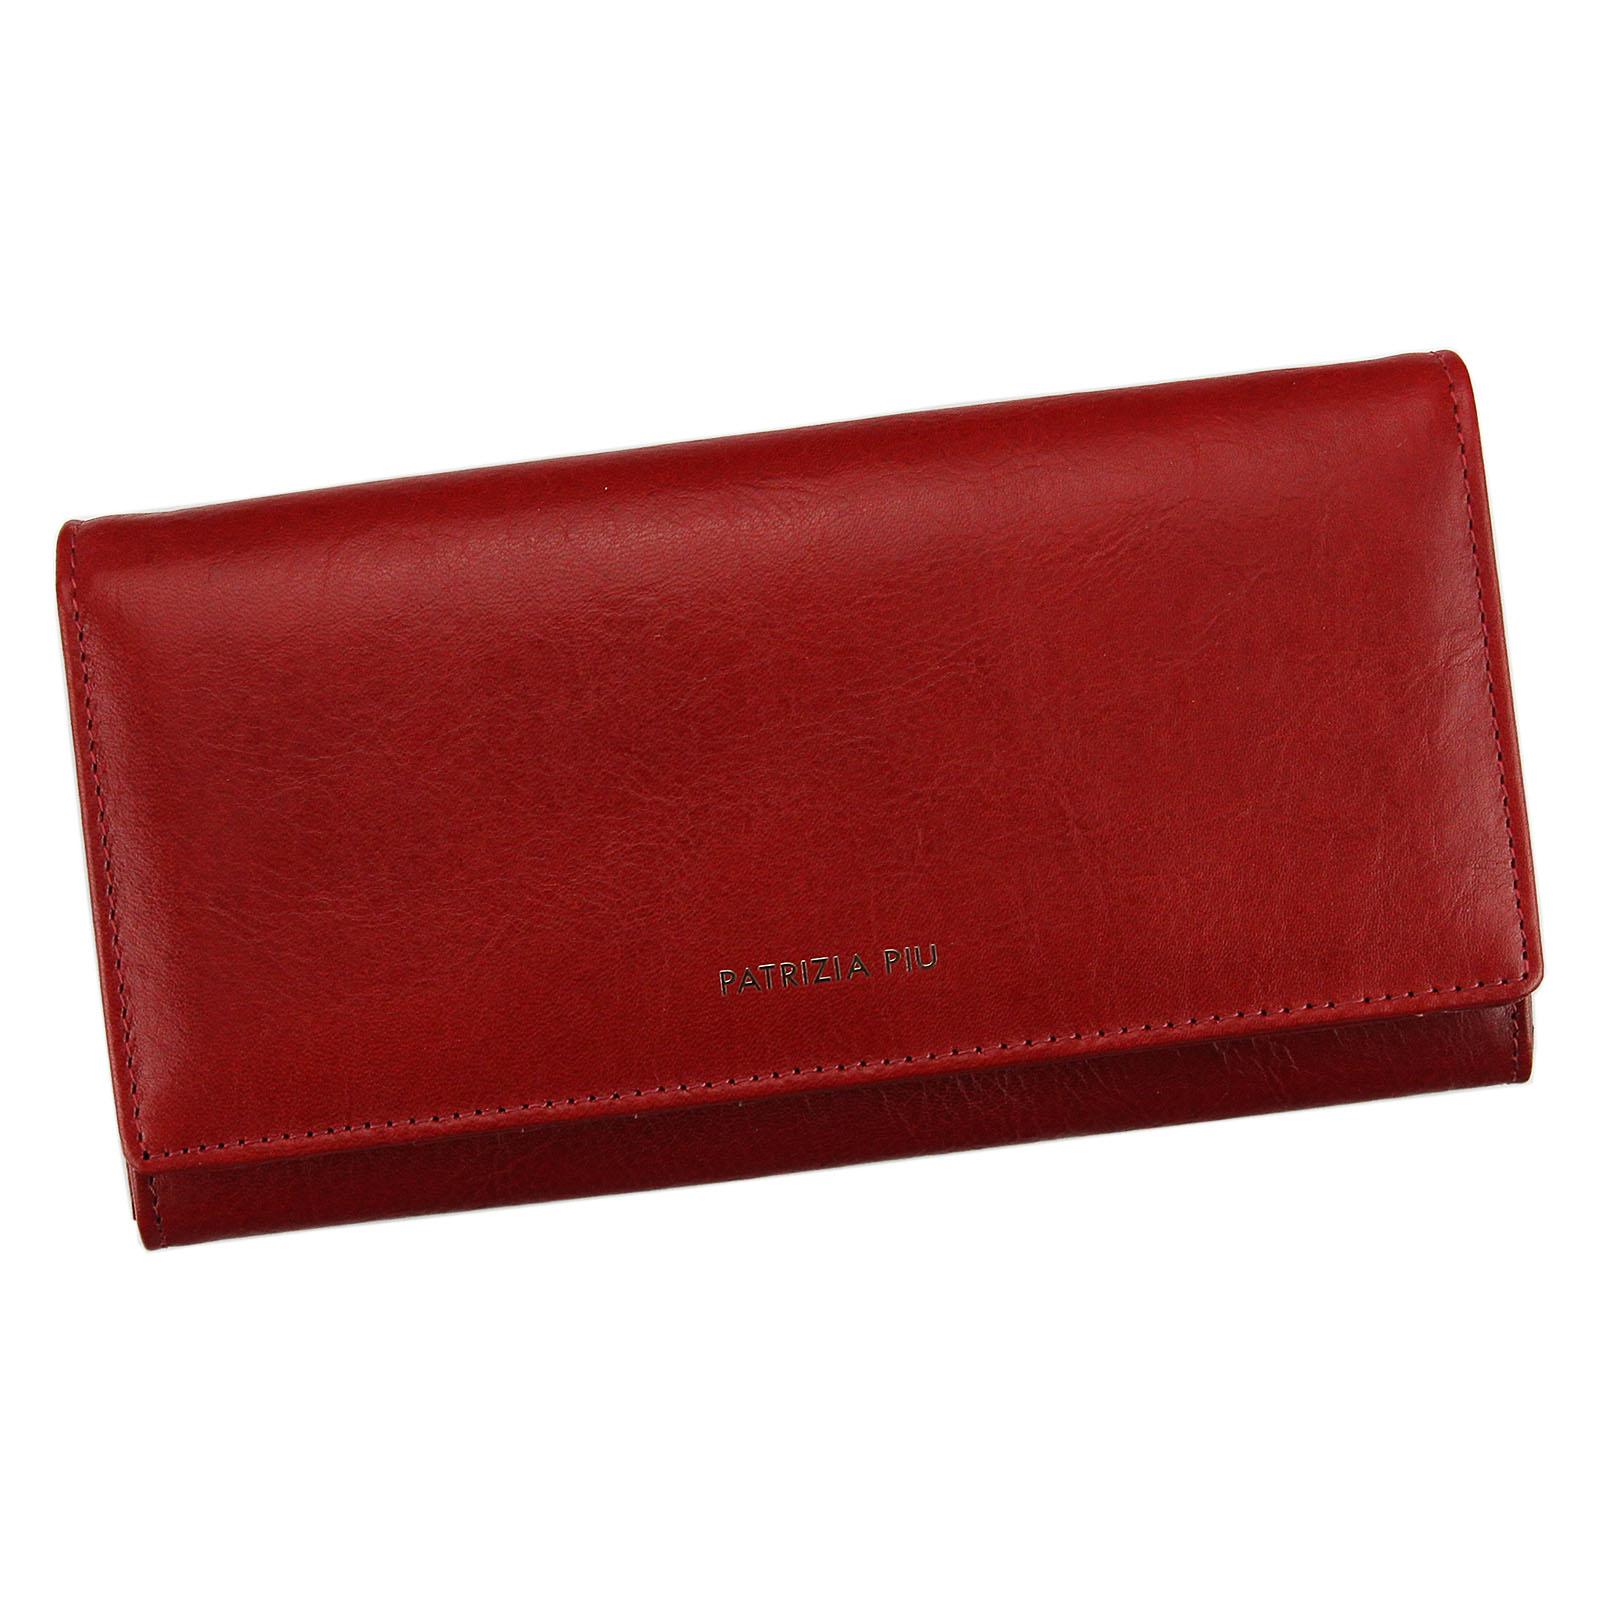 Červená kožená peněženka Patrizia Piu IT-106